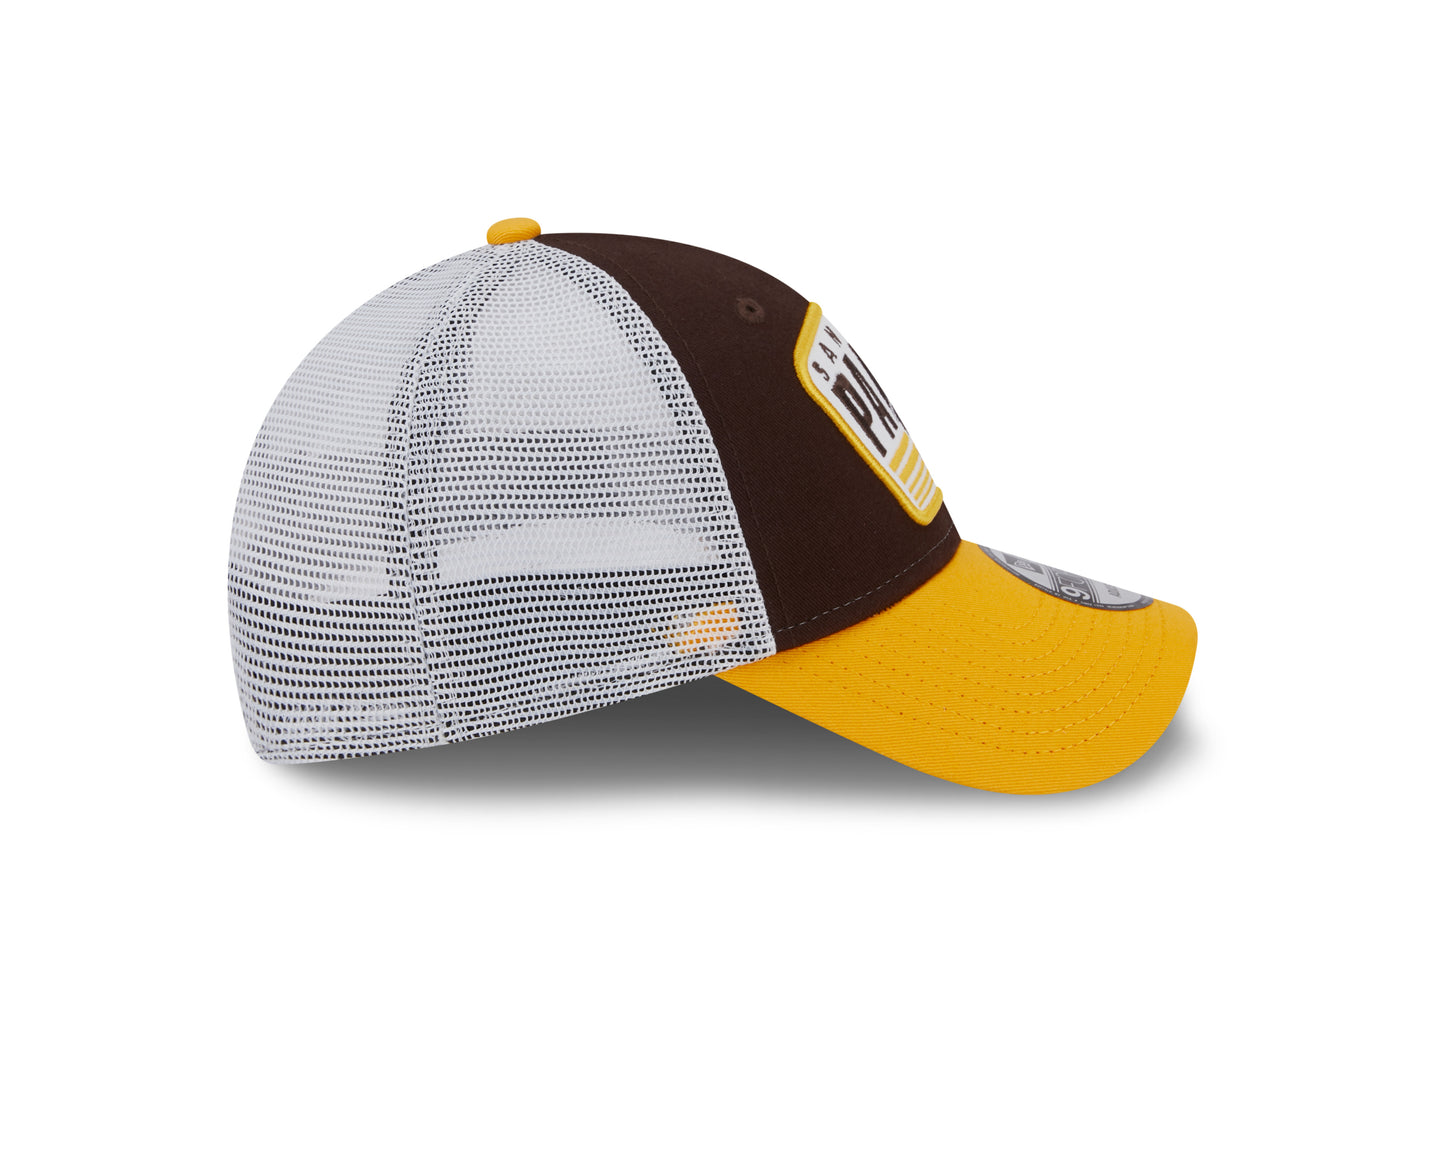 San Diego Padres New Era Logo Patch Trucker 9FORTY Snapback Hat